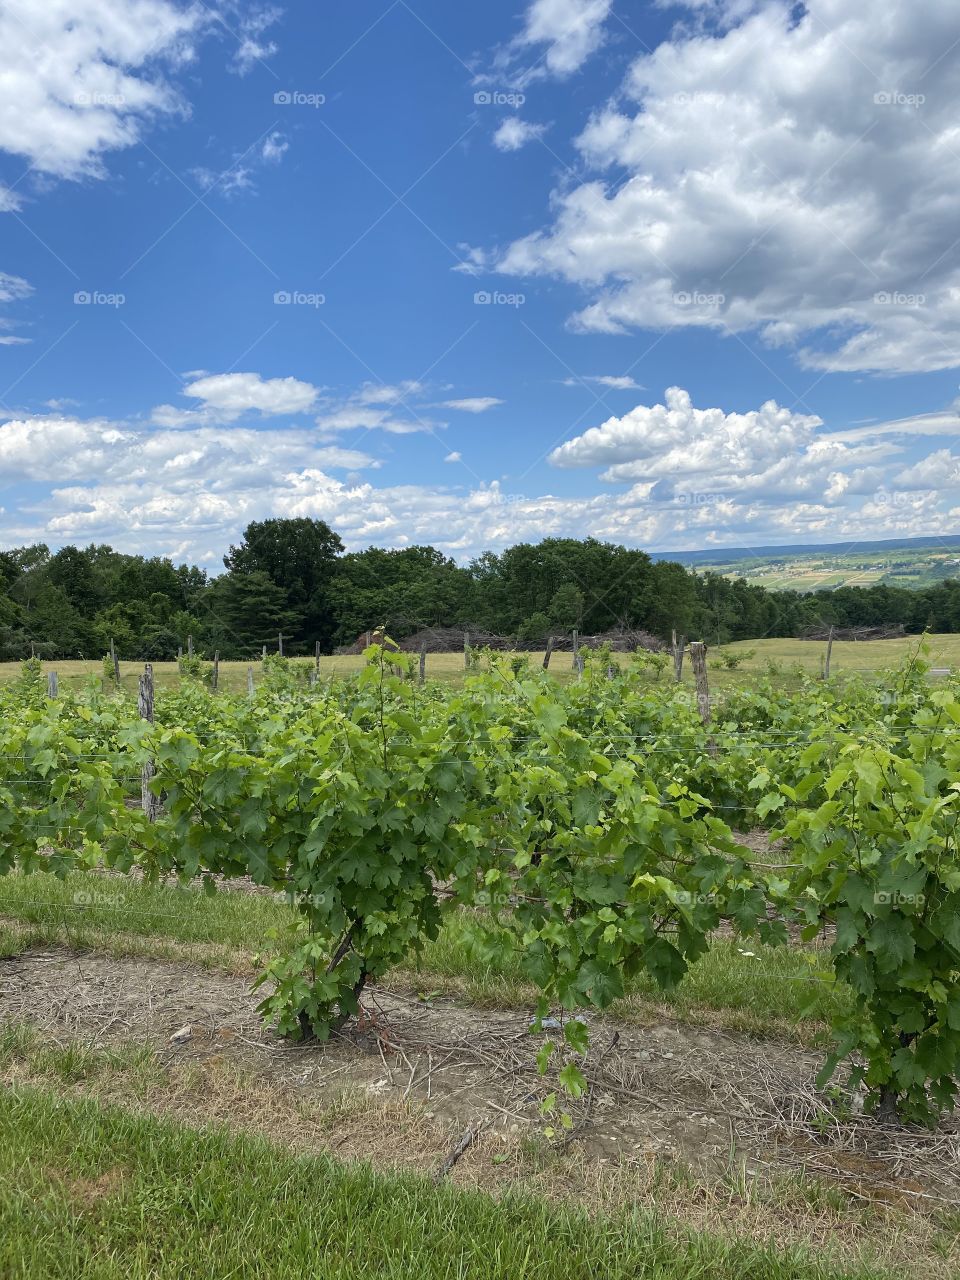 Finger lakes vineyard in summer